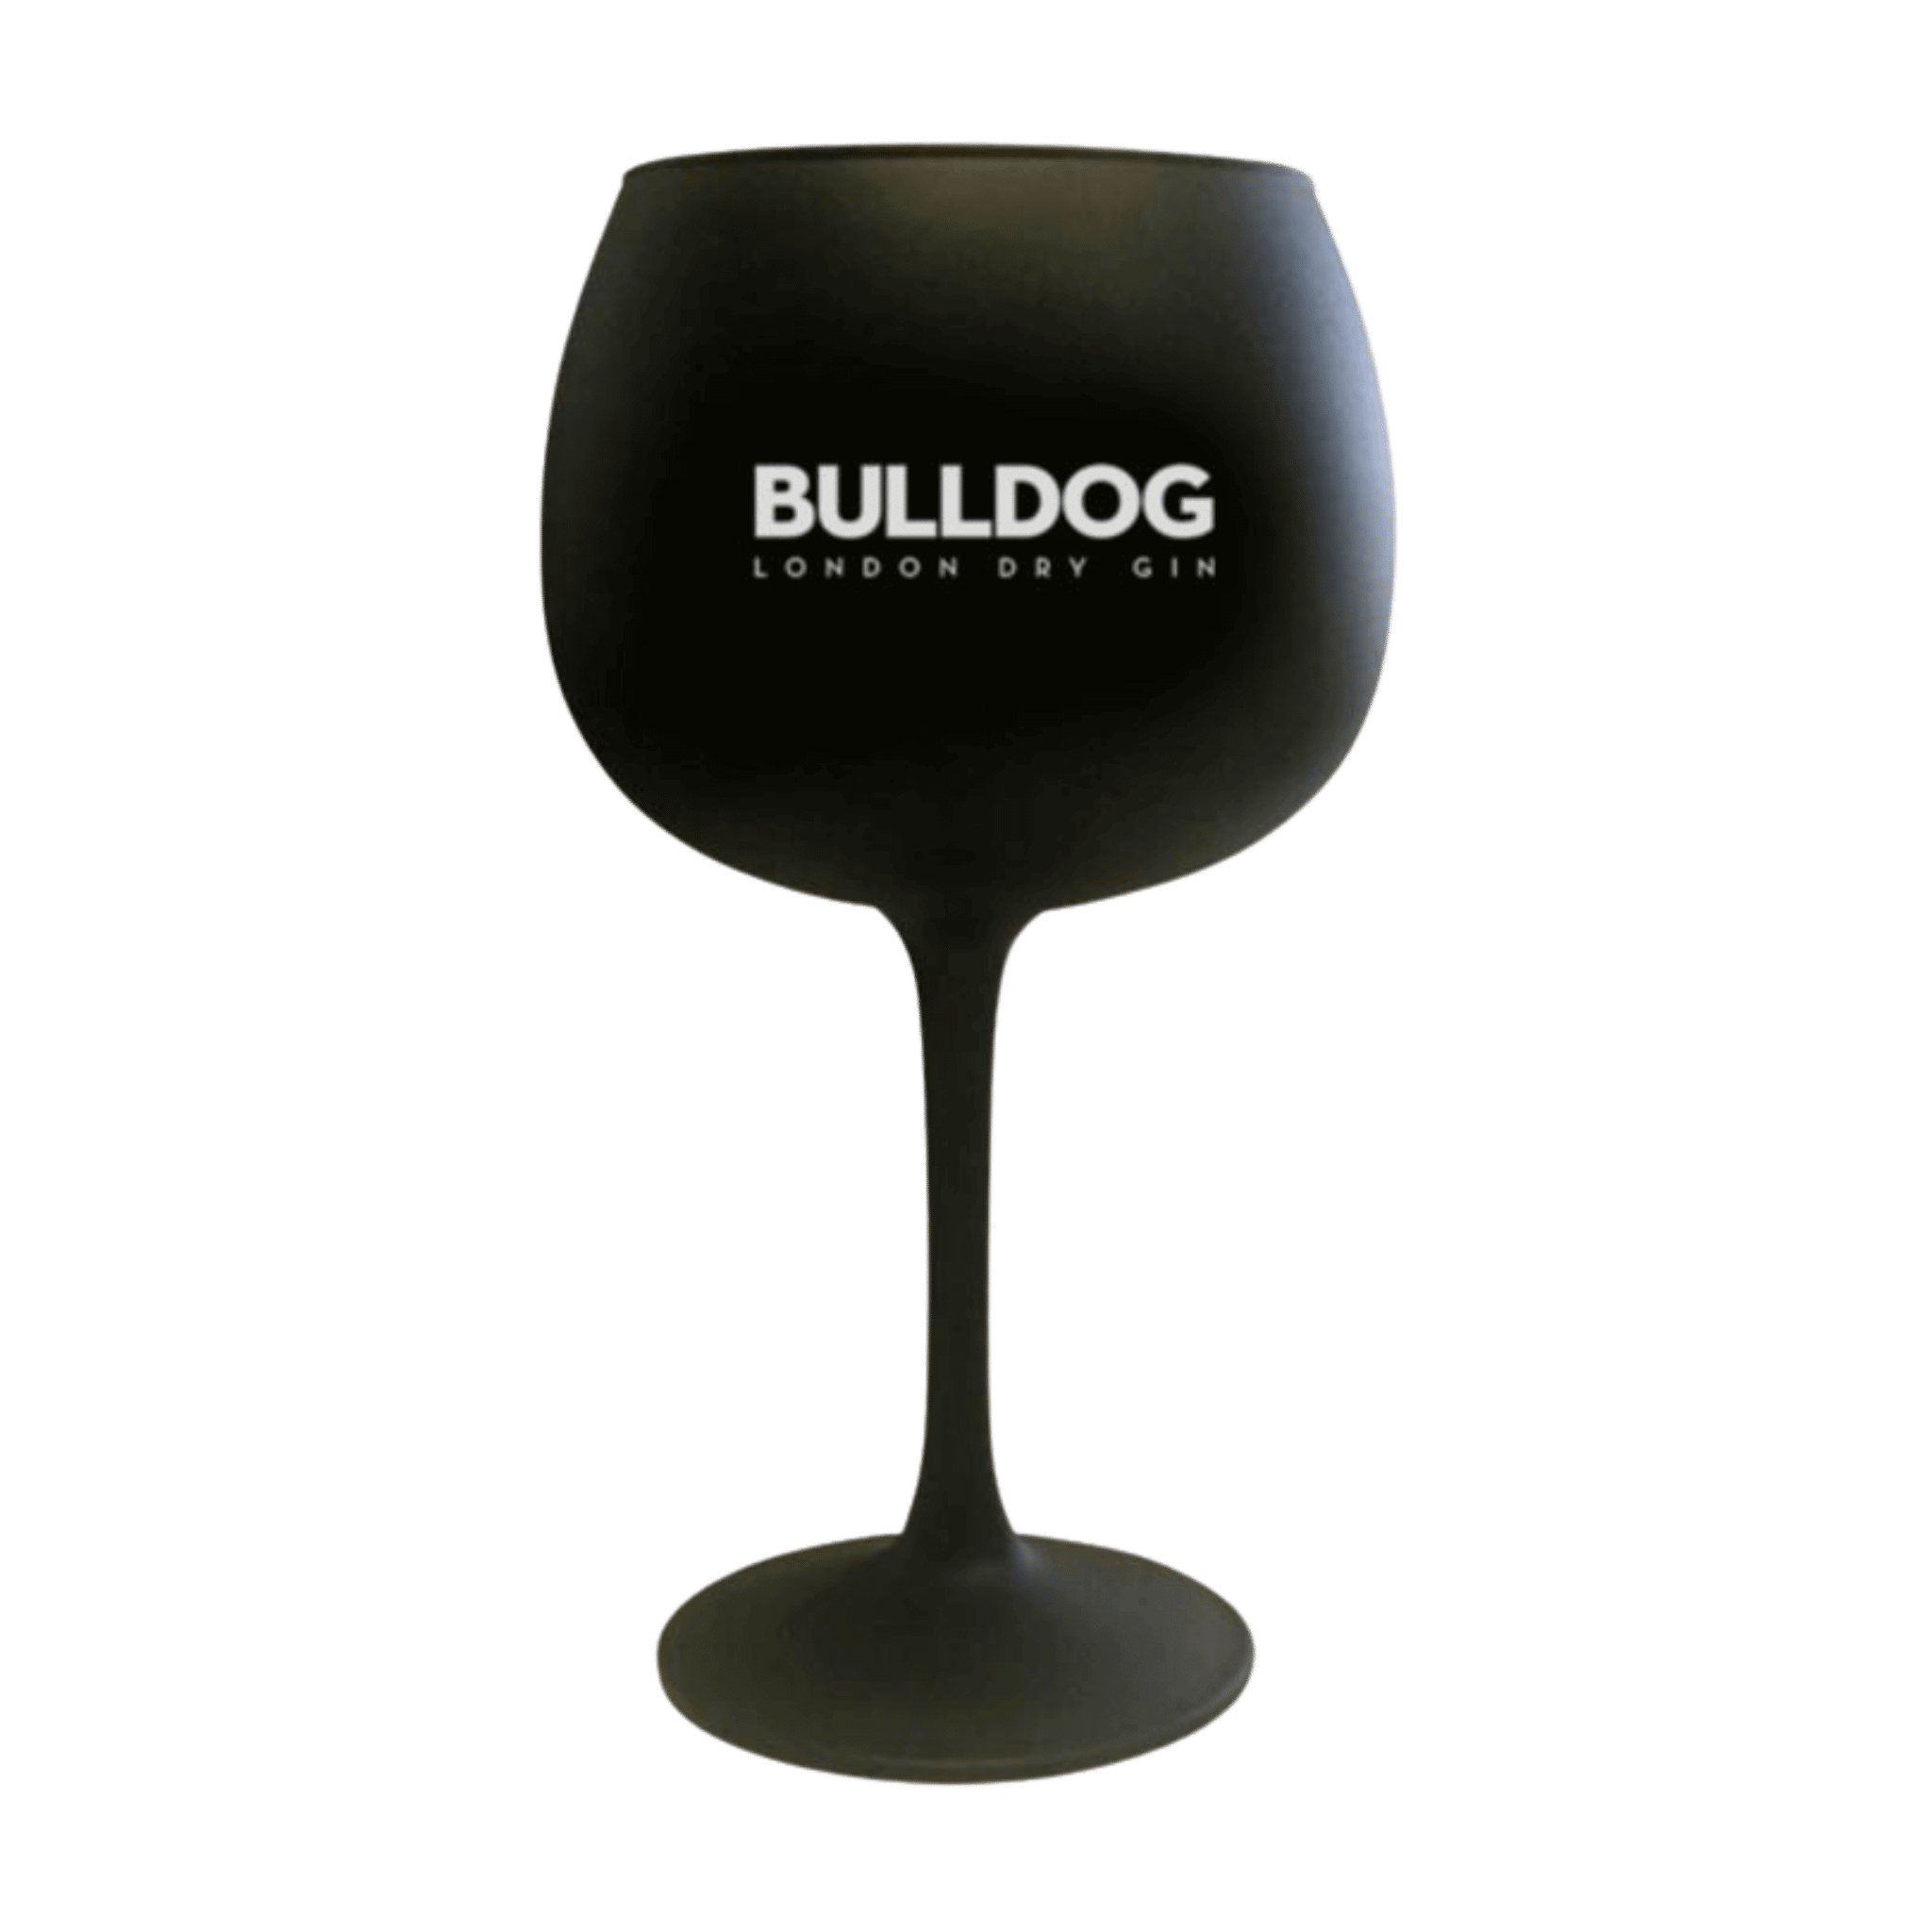 Bulldog Coppa Glass (Freebie) at ₱0.00